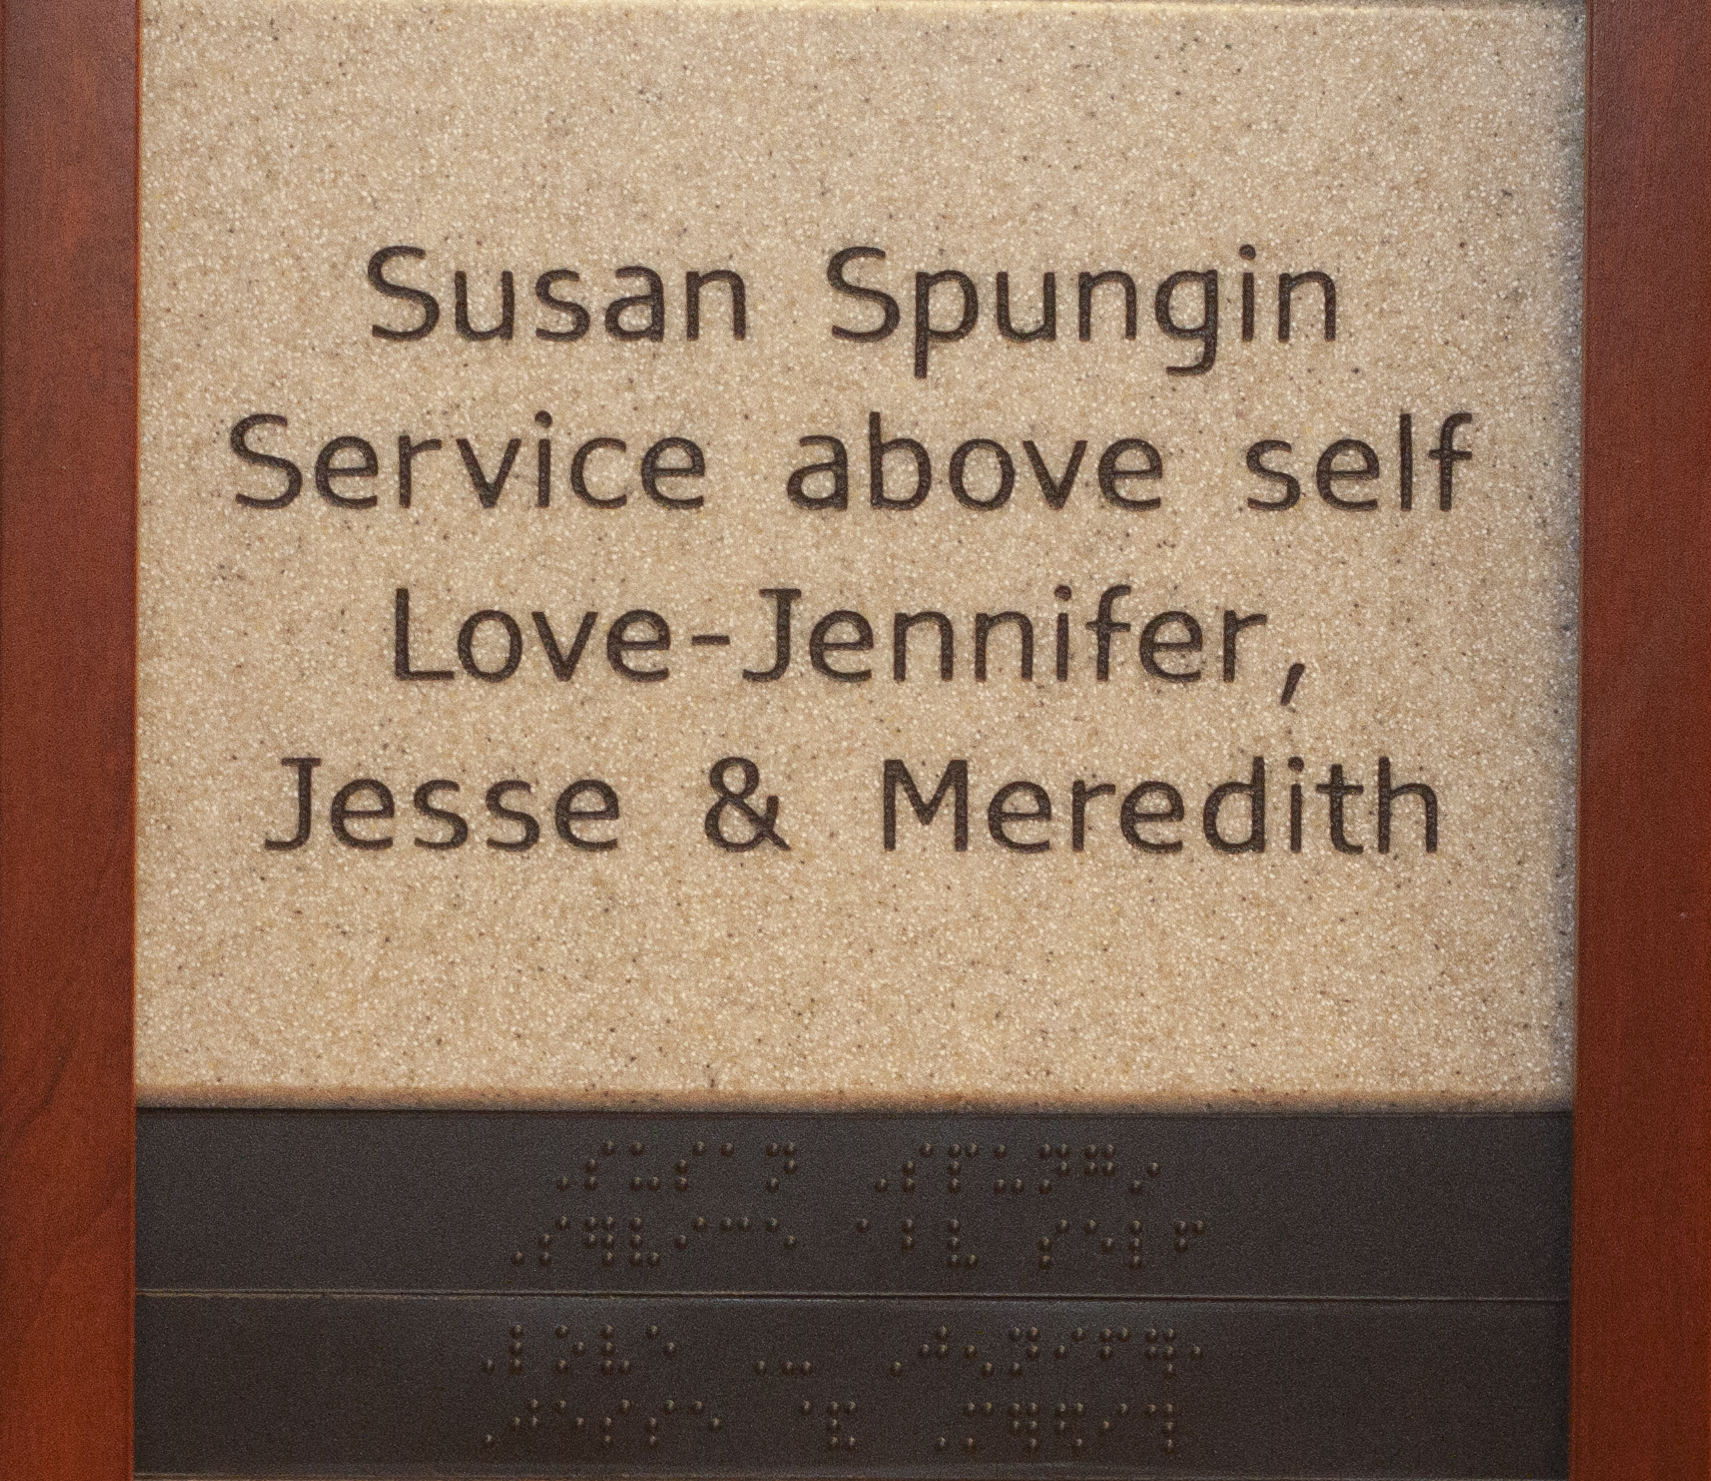 Susan Spungin, Service above self, Love-Jennifer, Jesse & Meredith